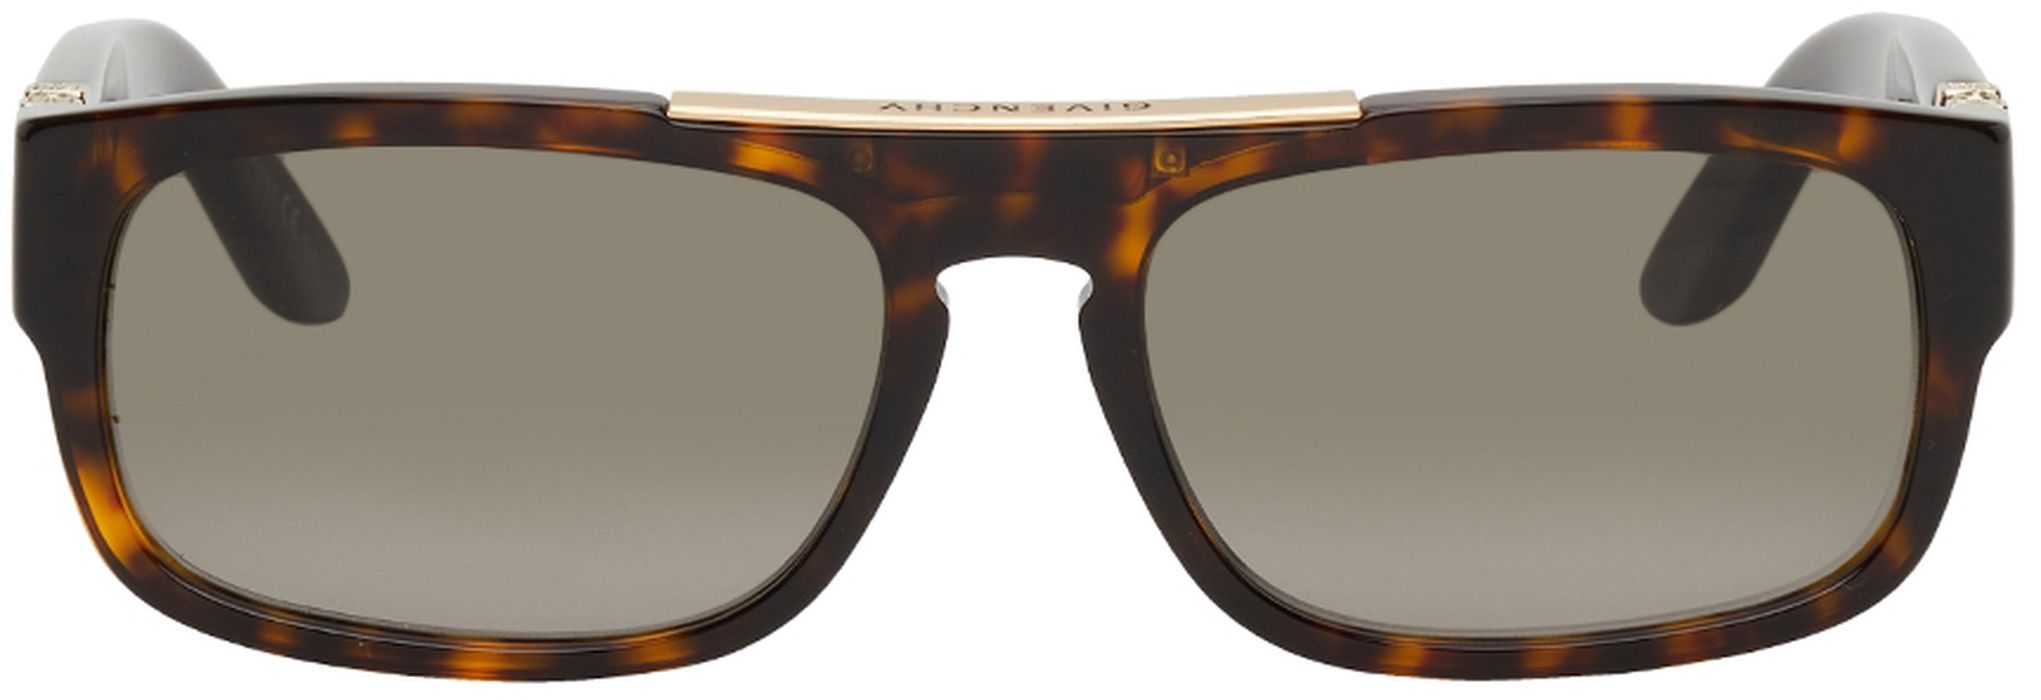 Givenchy Tortoiseshell GV Hinge Rectangular Sunglasses